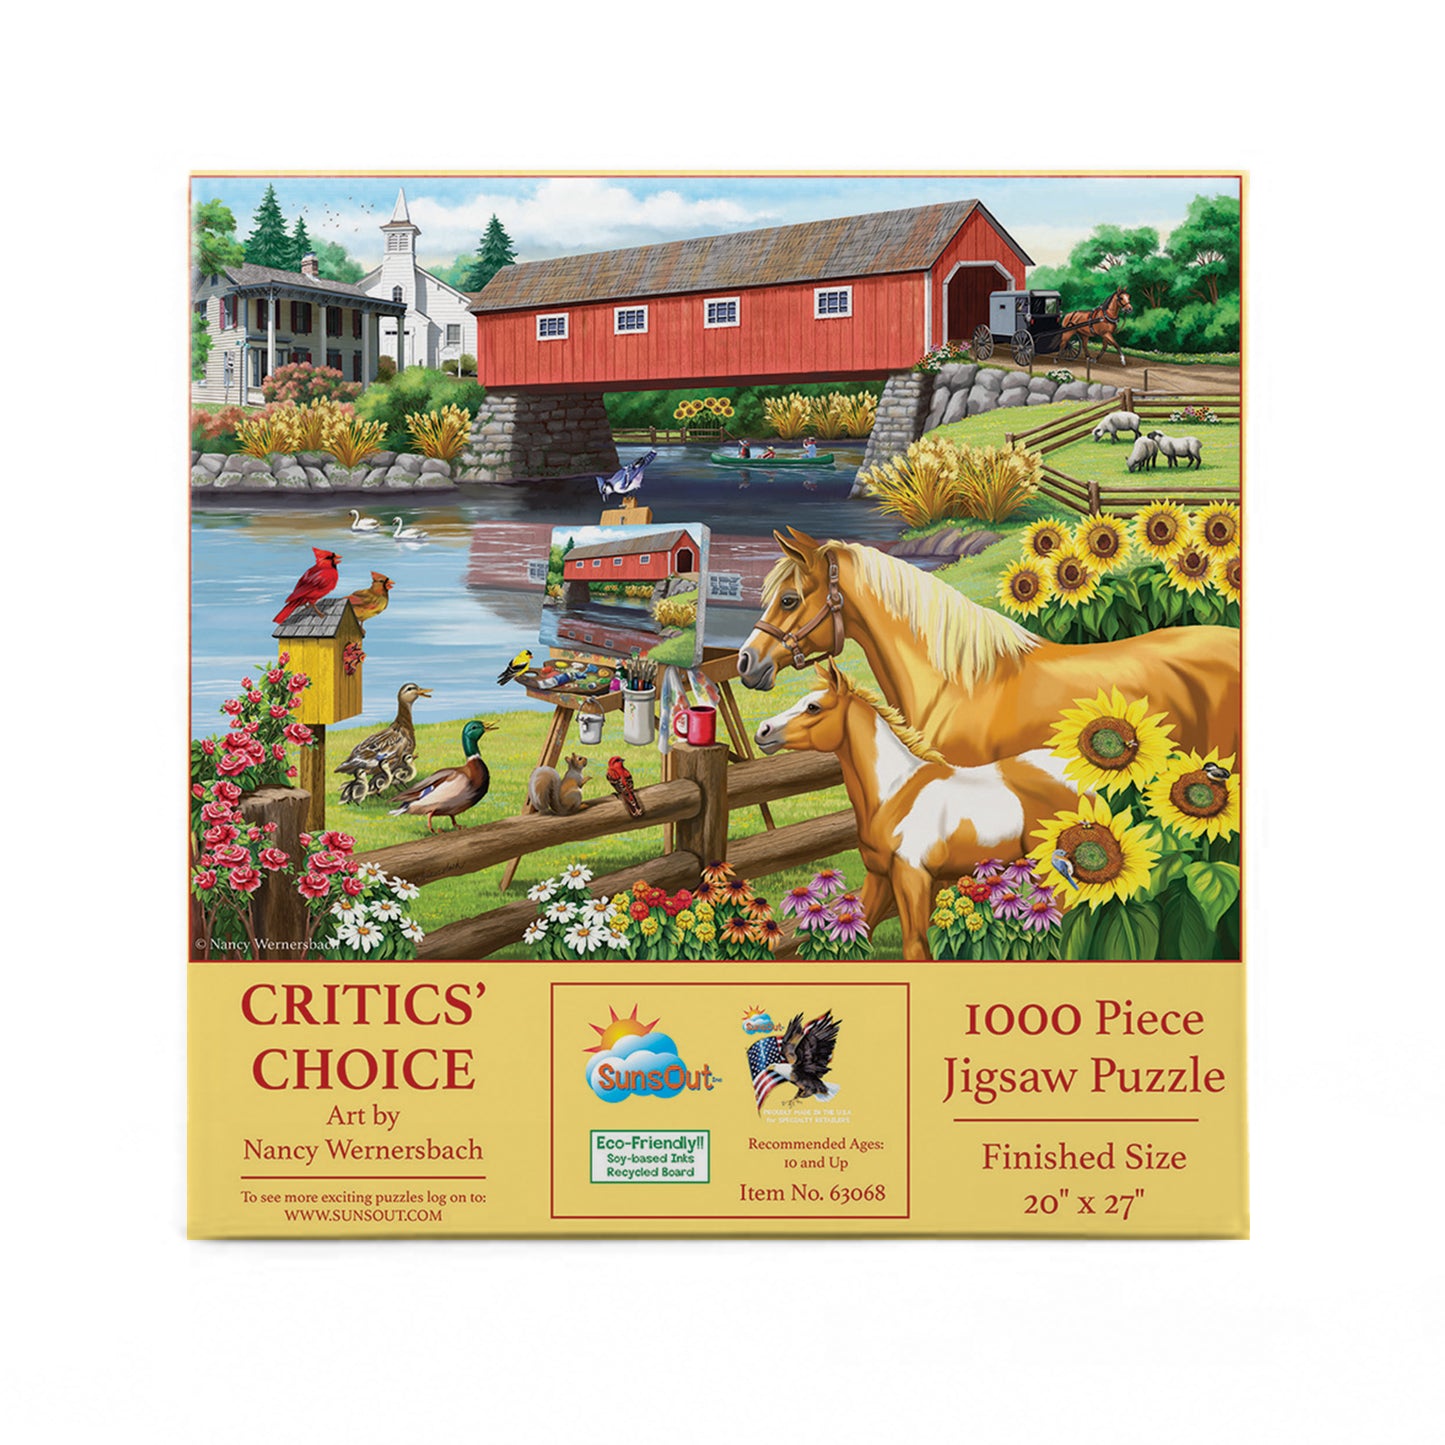 Critics' Choice - 1000 Piece Jigsaw Puzzle